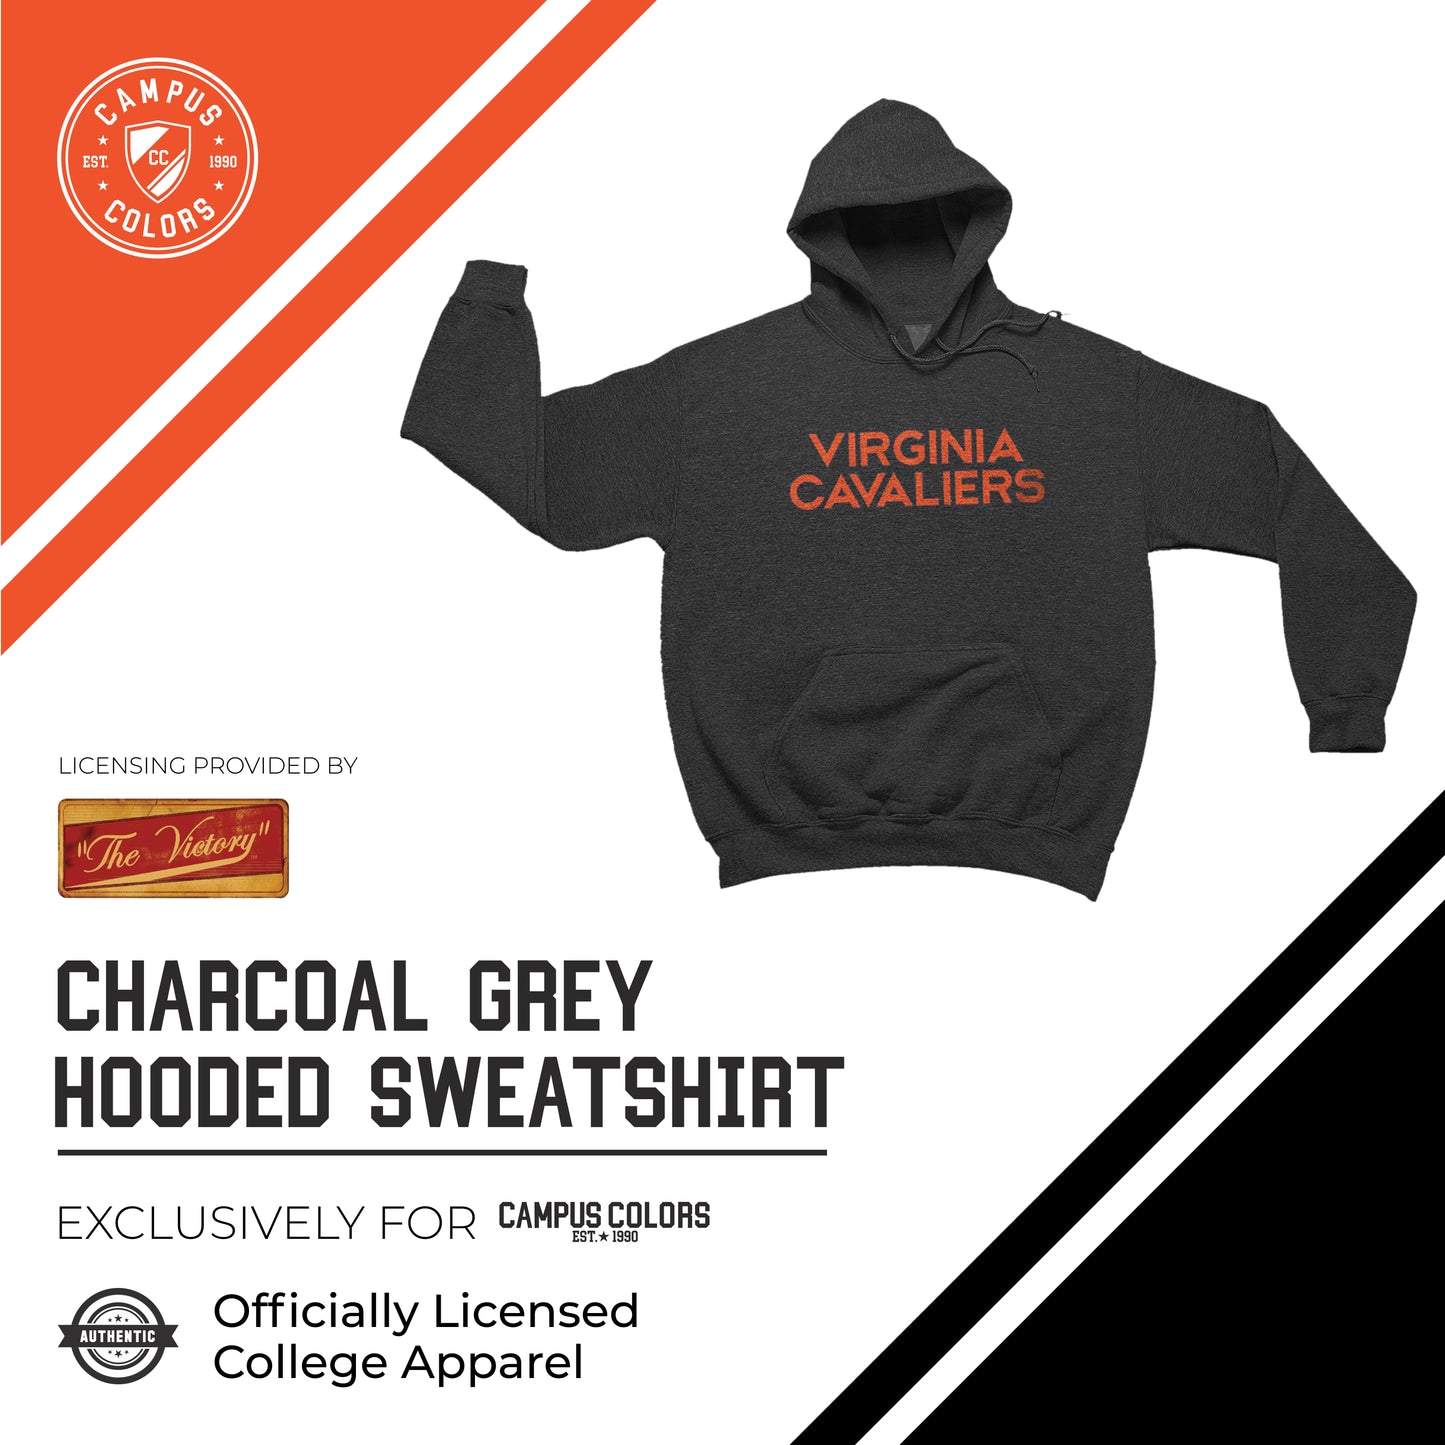 Virginia Cavaliers NCAA Adult Cotton Blend Charcoal Hooded Sweatshirt - Charcoal